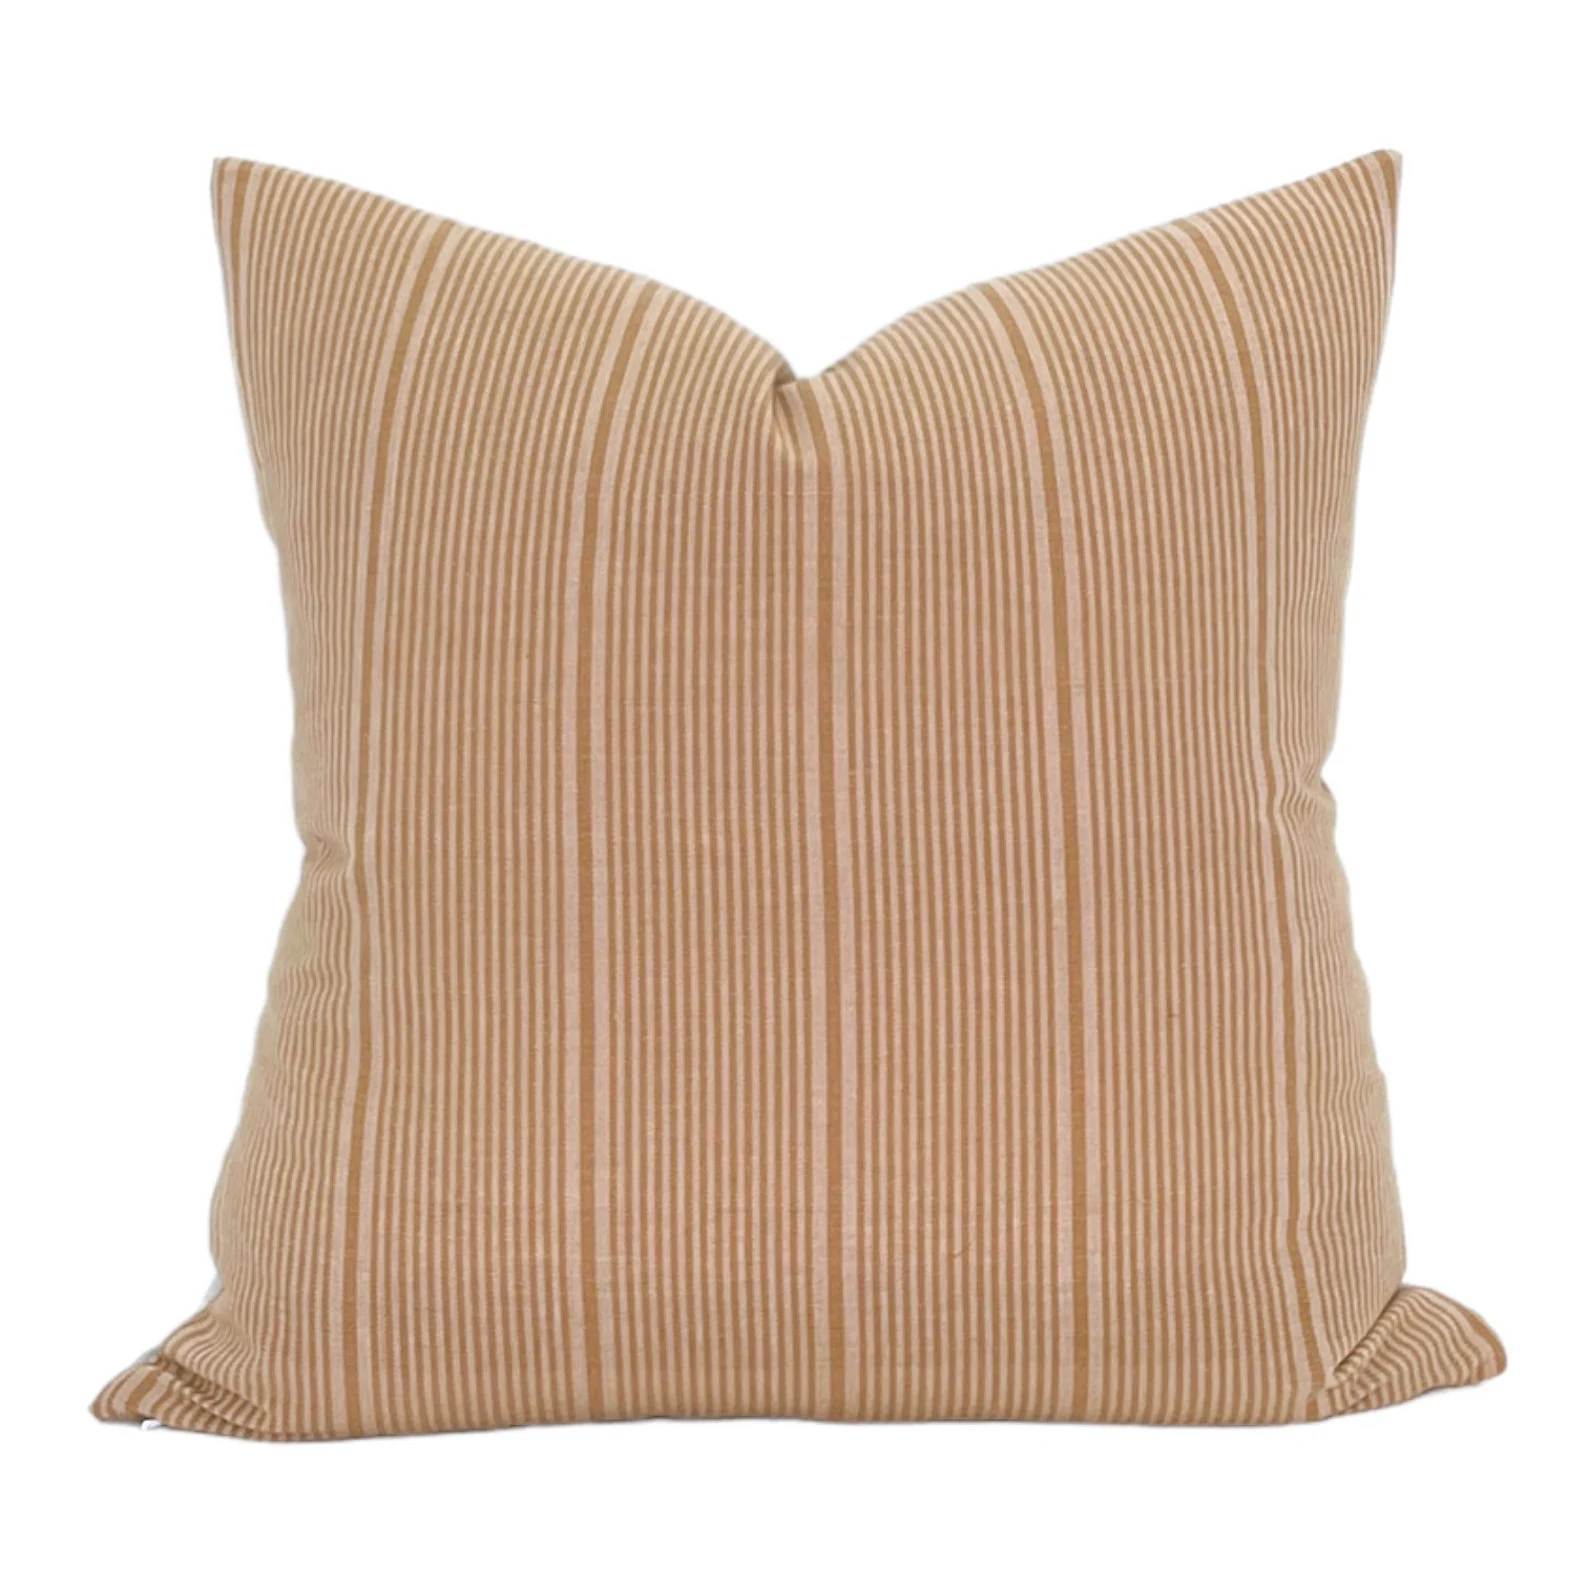 Spice Stripe Pillow Cover